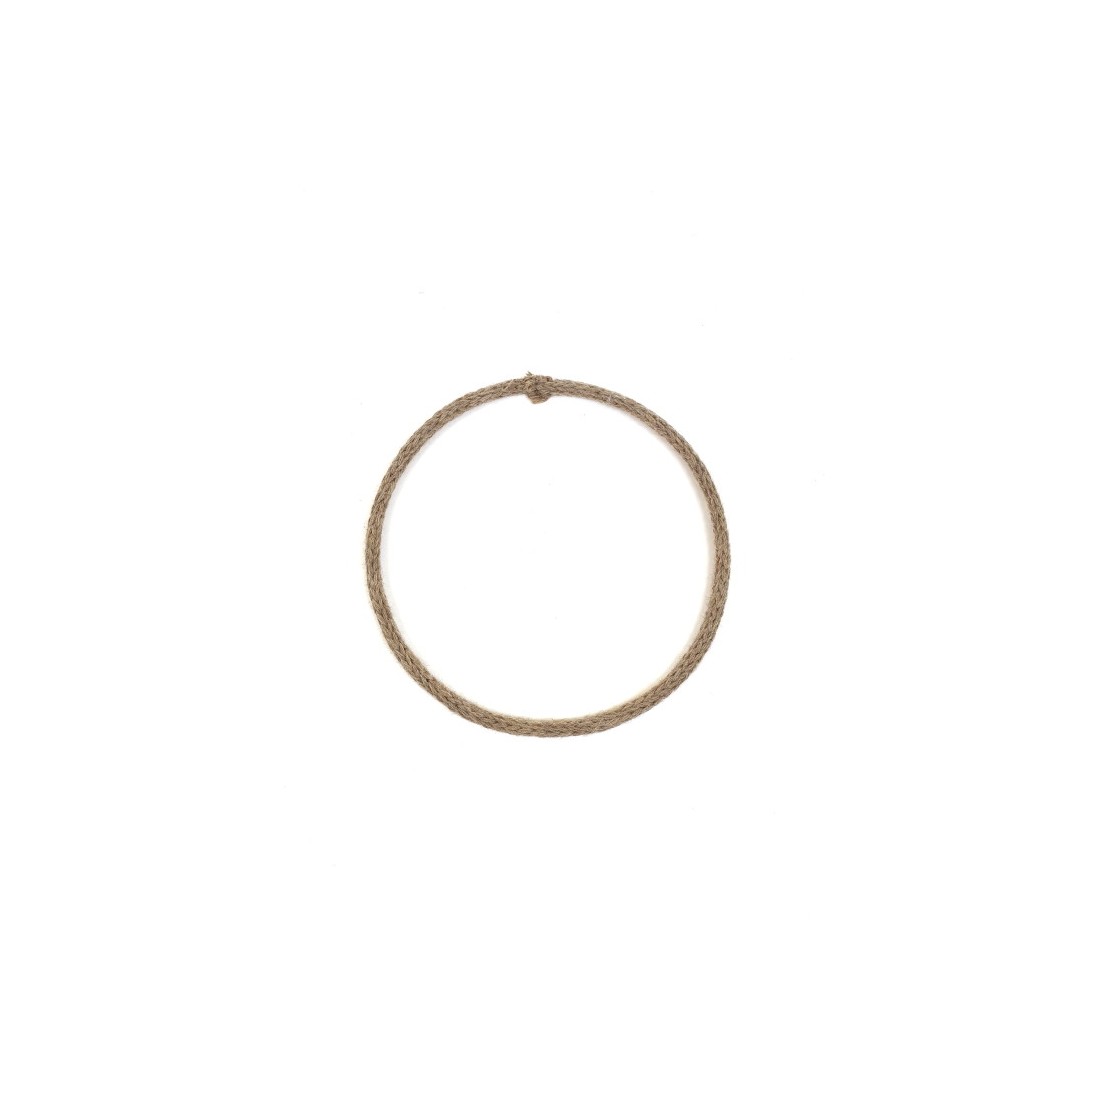 Cerchio in metallo diam. cm 16 (saldato) con corda in lana tubolare marrone  melange